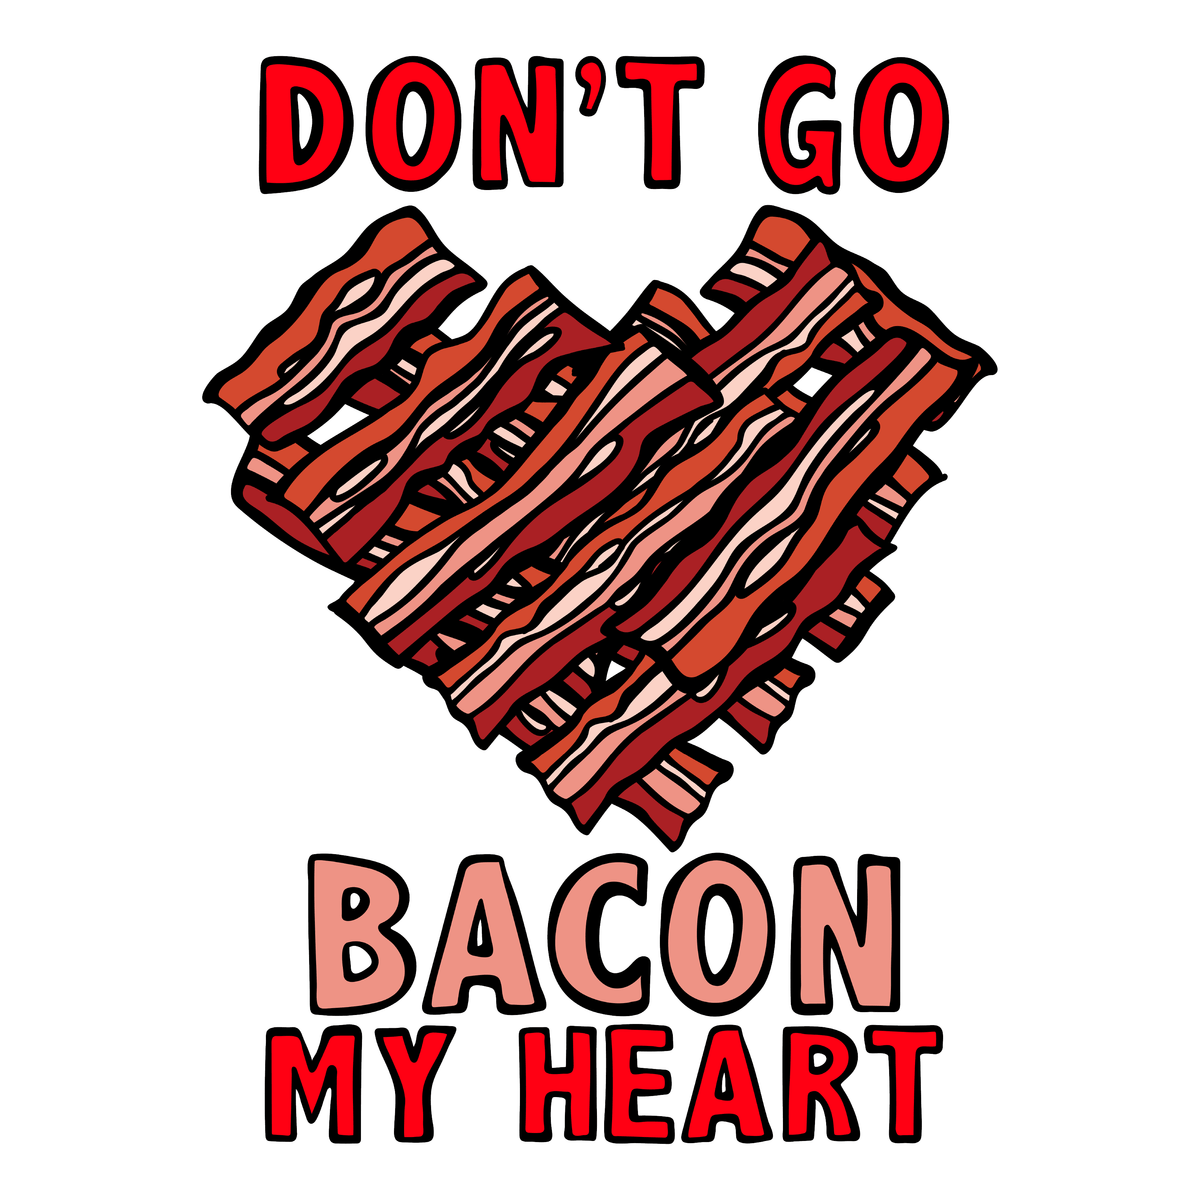 Bacon My Heart 🥓❤️- Coffee Mug